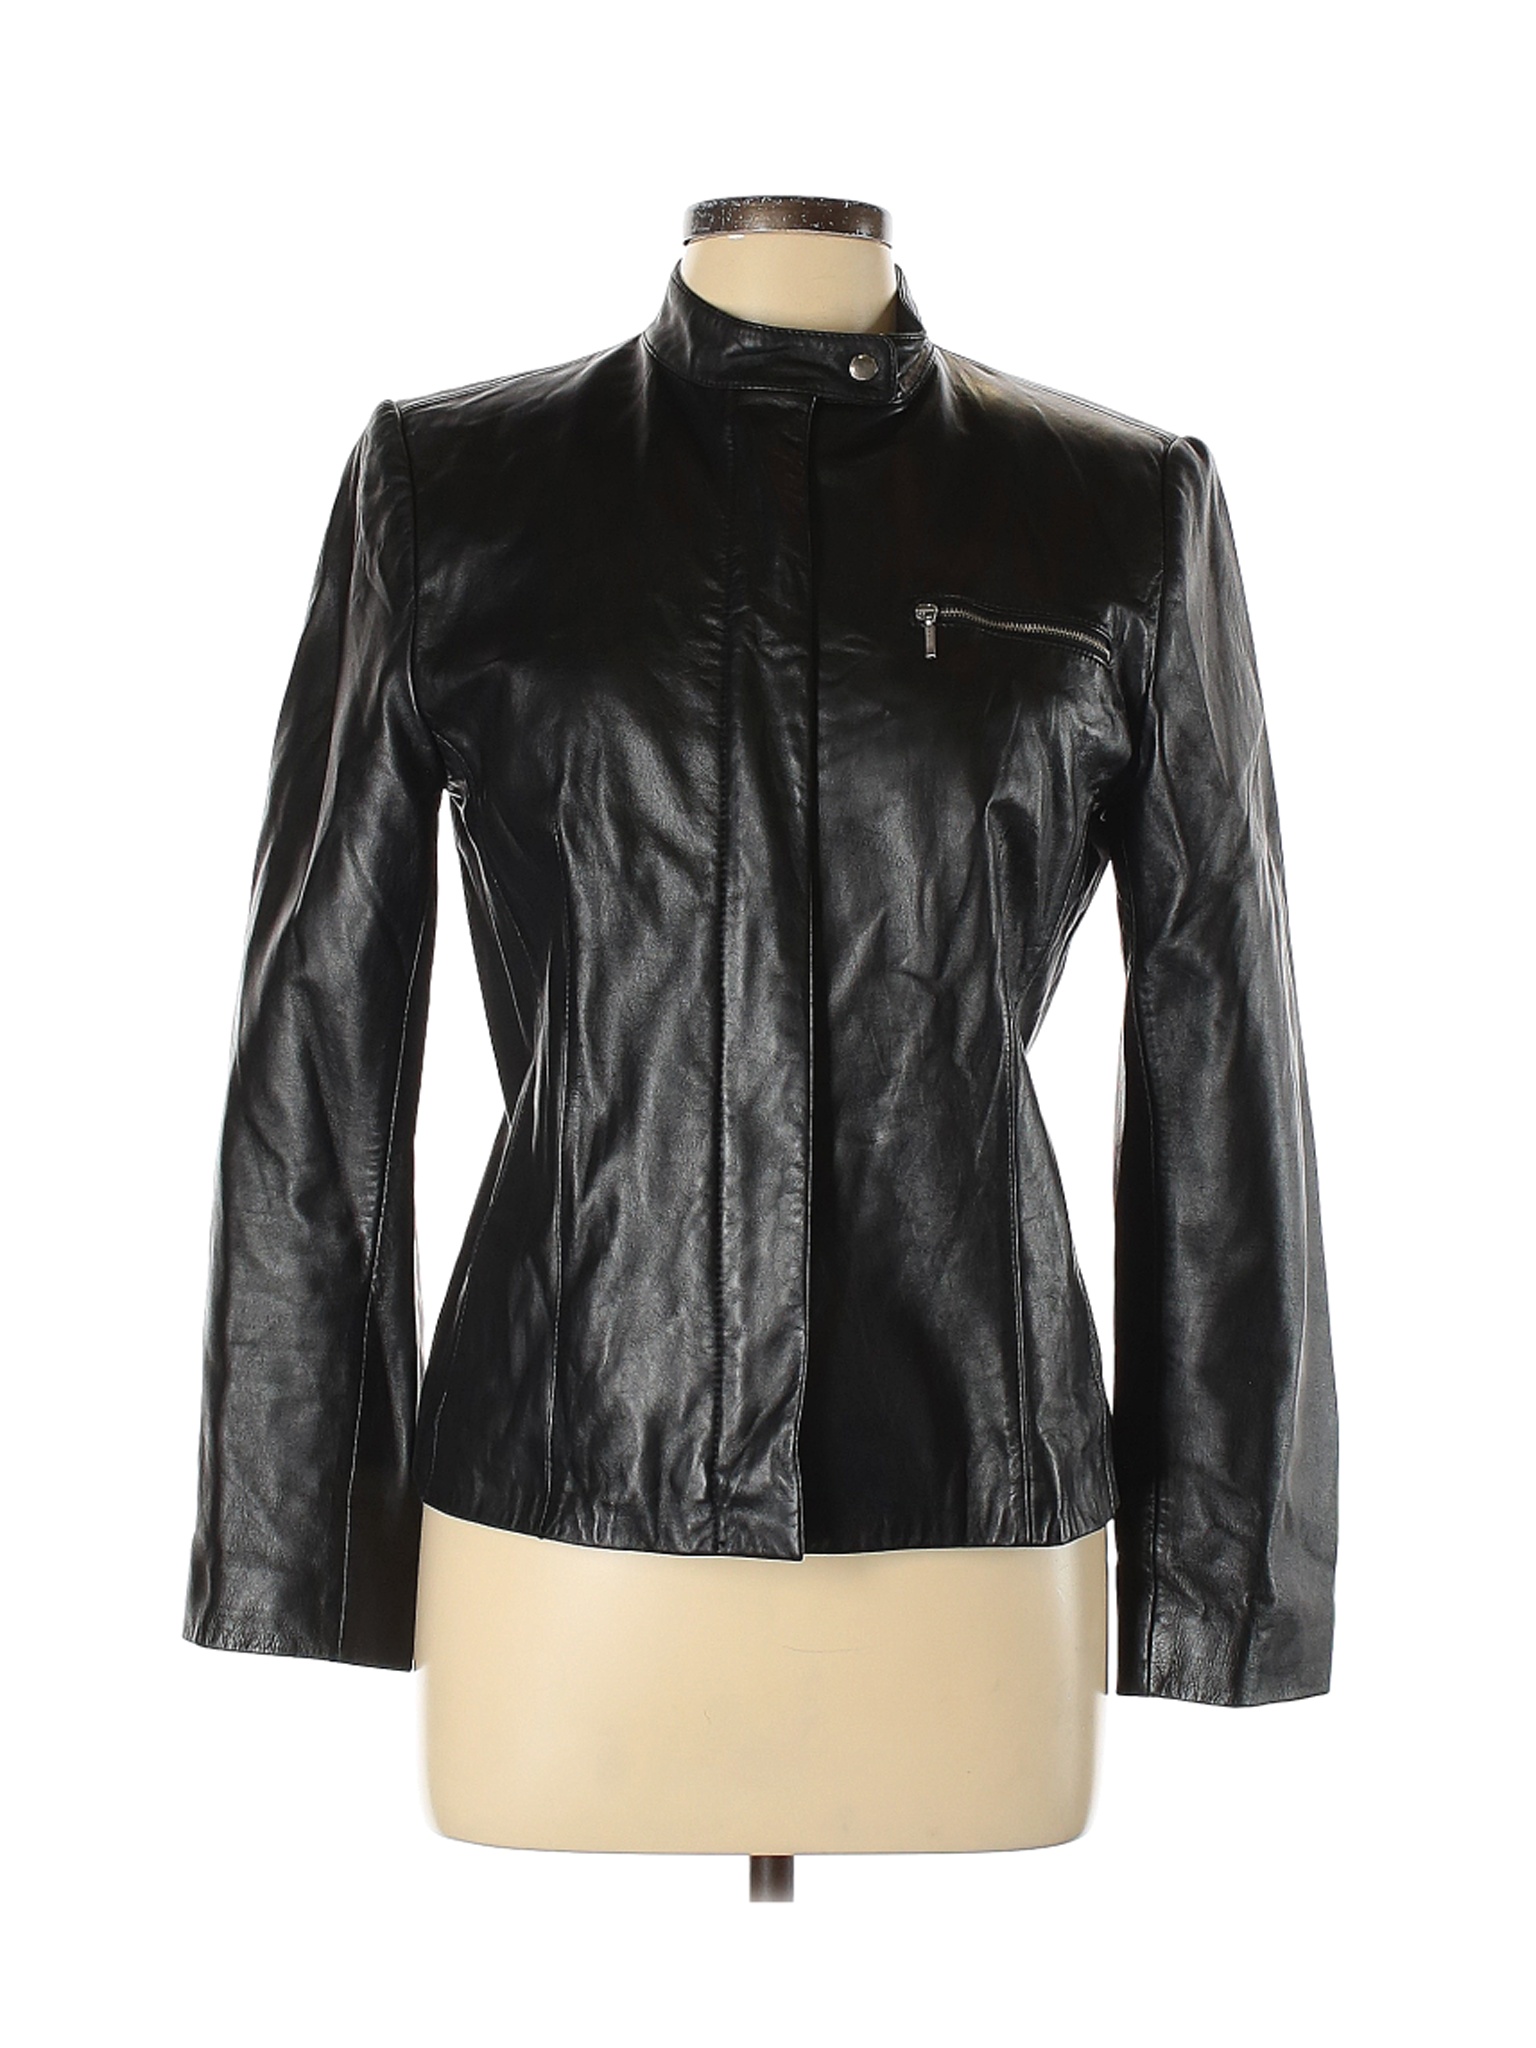 Ann Taylor LOFT Women Black Leather Jacket 6 | eBay